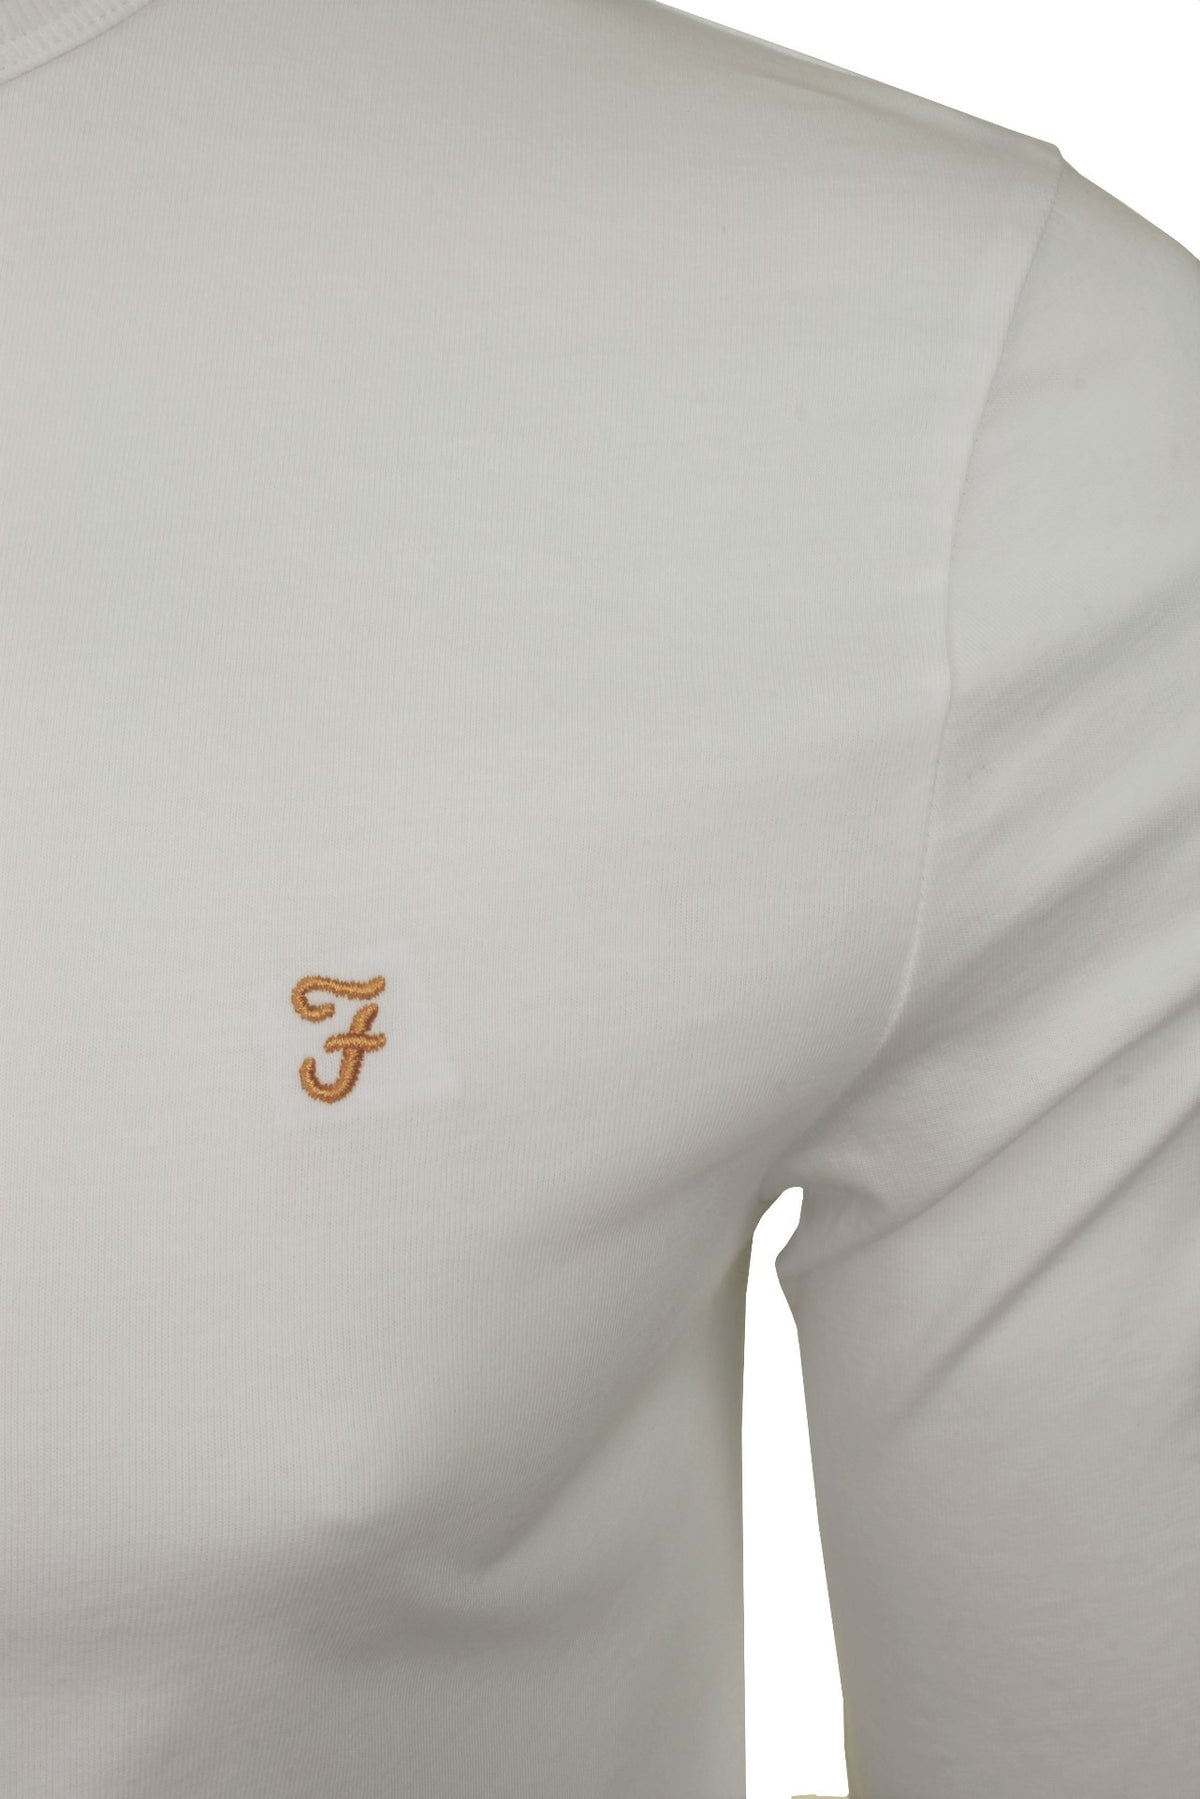 Farah Mens 'Worthington' Long Sleeved T-Shirt, 02, F4Ksb057, White